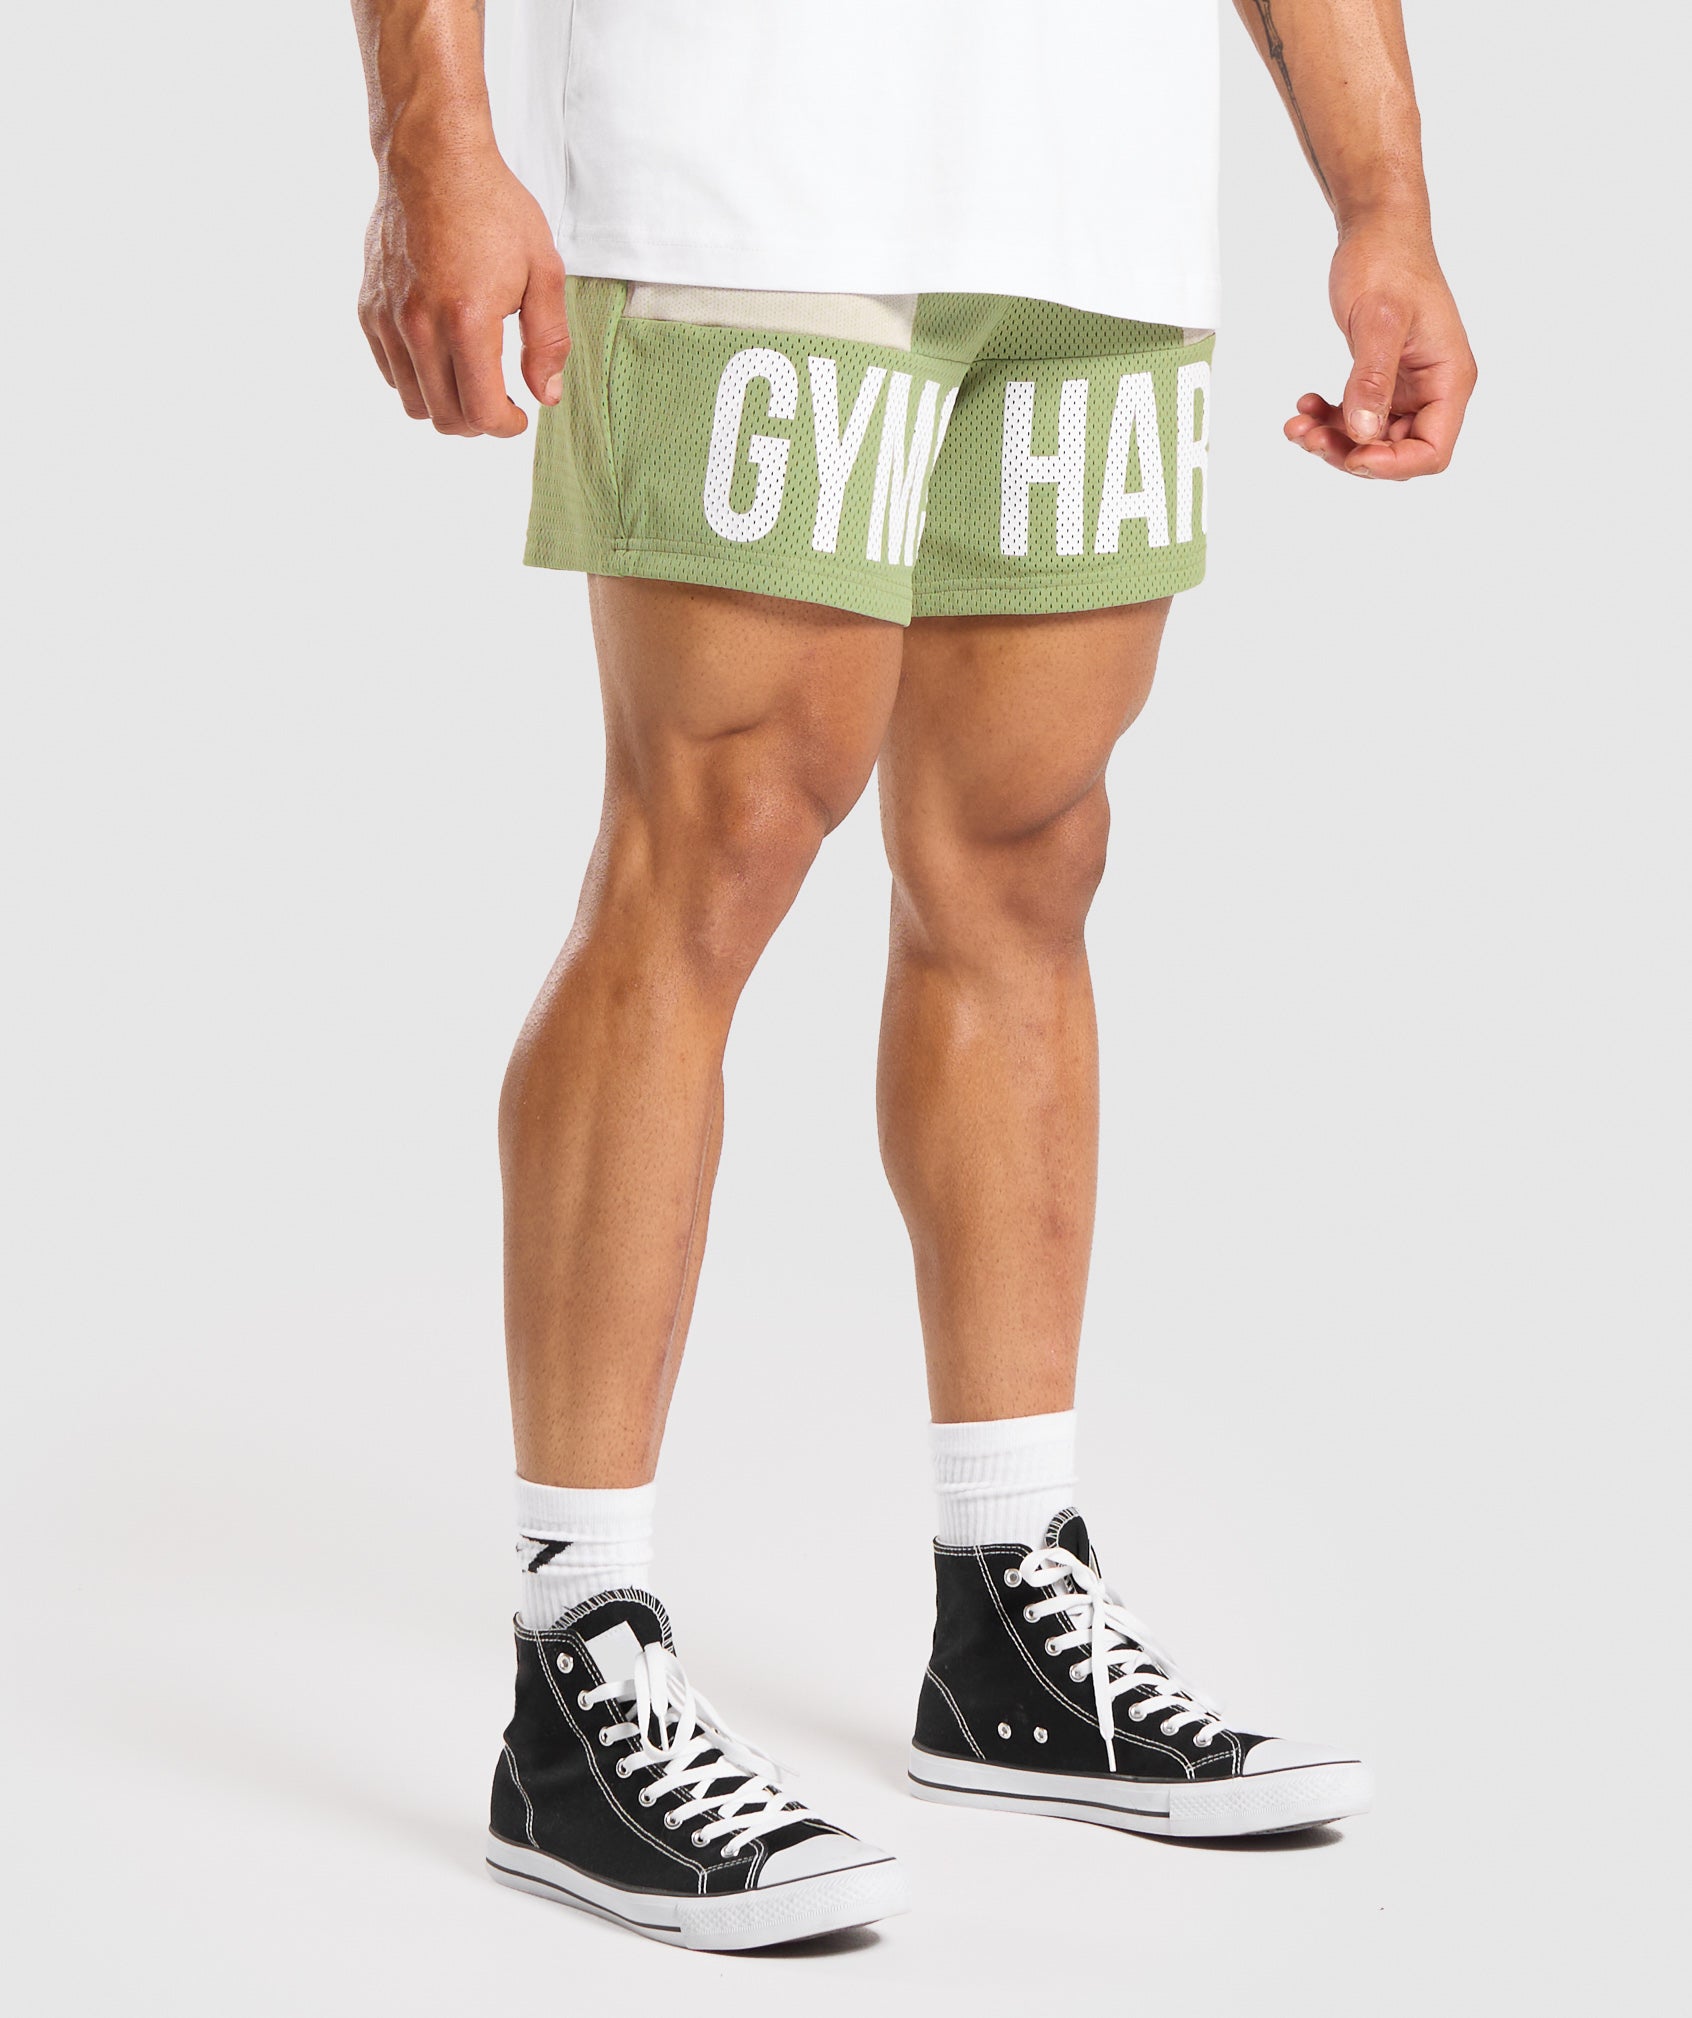 Brandmark Mesh 5" Shorts in Natural Sage Green/Pebble Grey - view 3